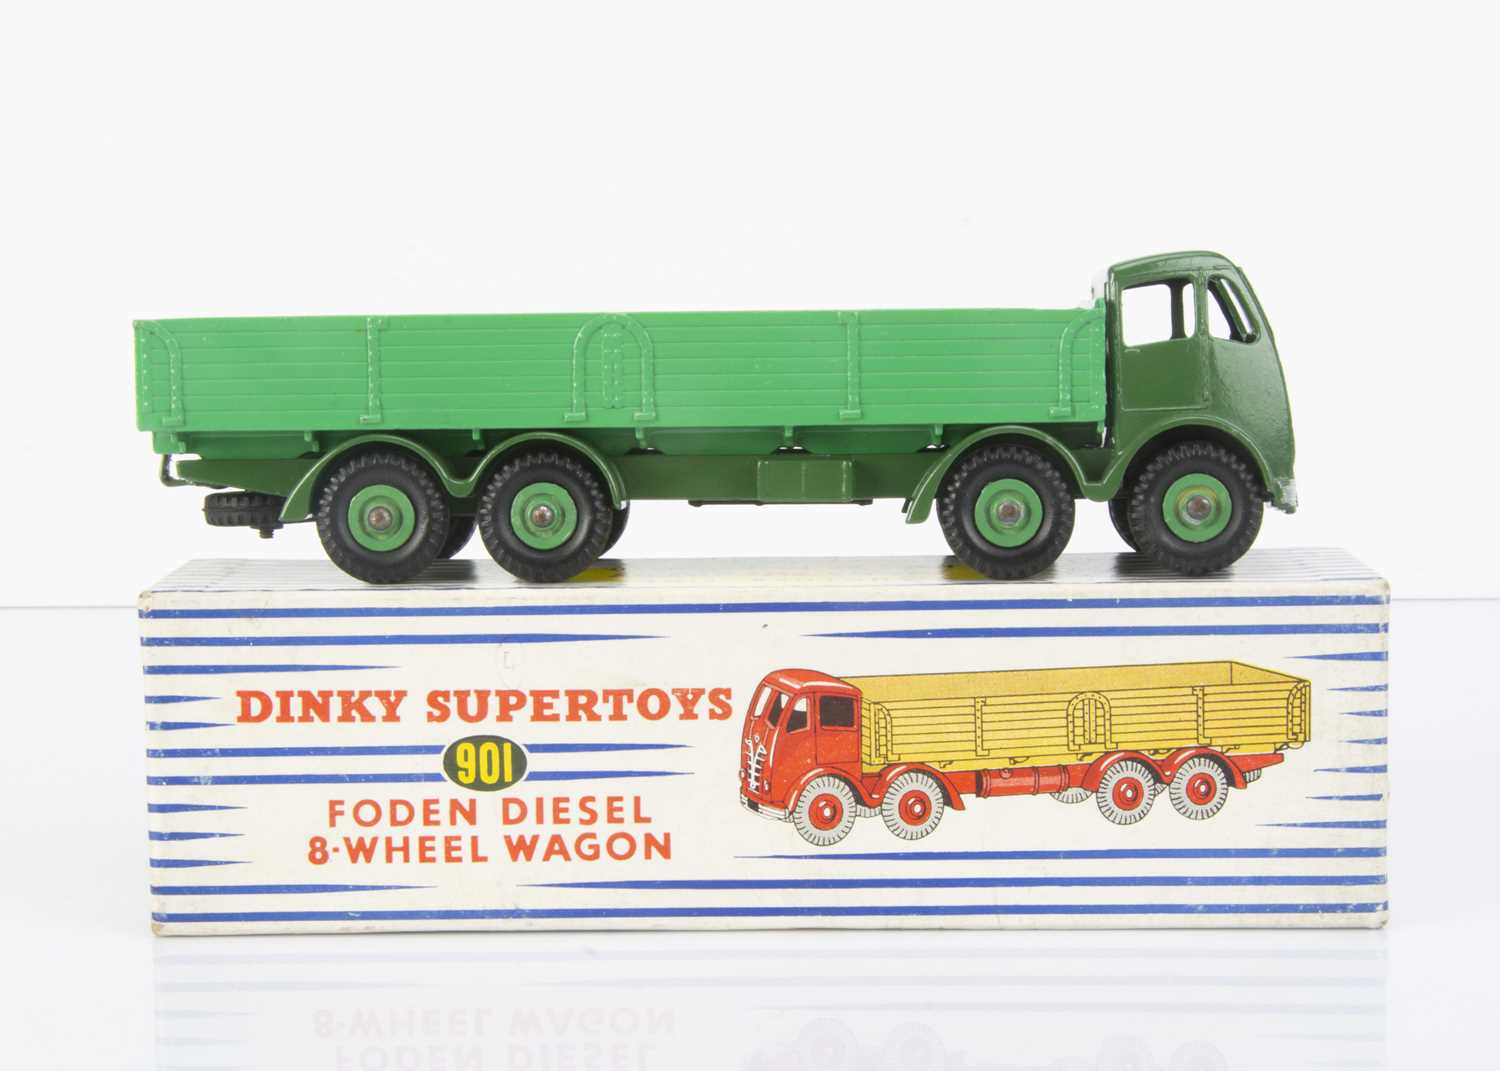 Lot 127 - A Dinky Supertoys 901 Foden Diesel 8-Wheel Wagon